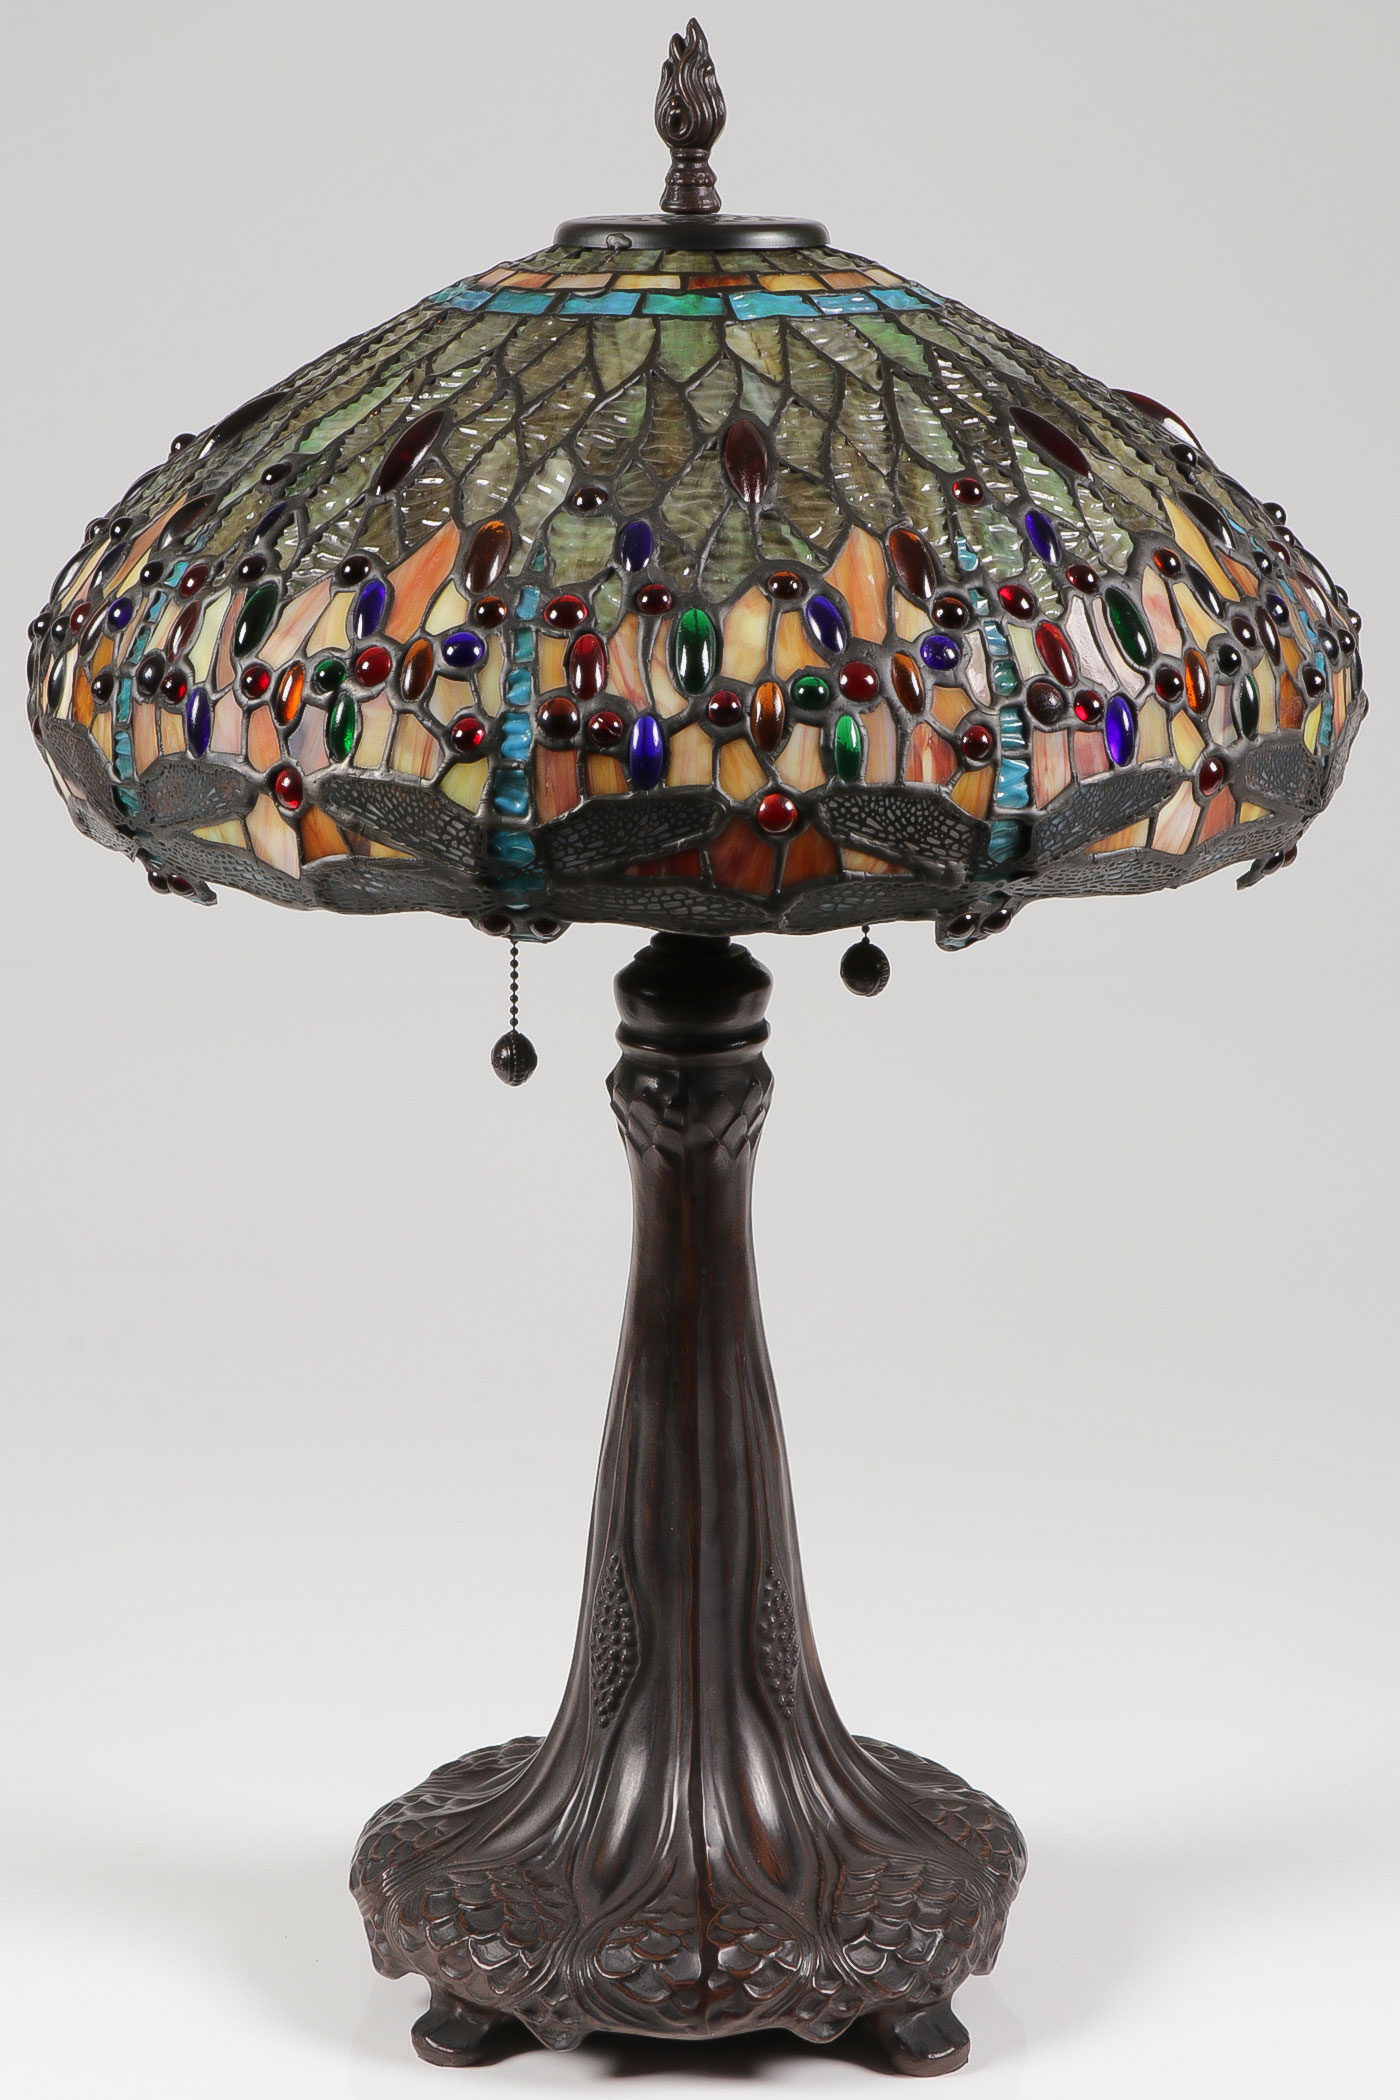 A TIFFANY STYLE DRAGONFLY LAMP